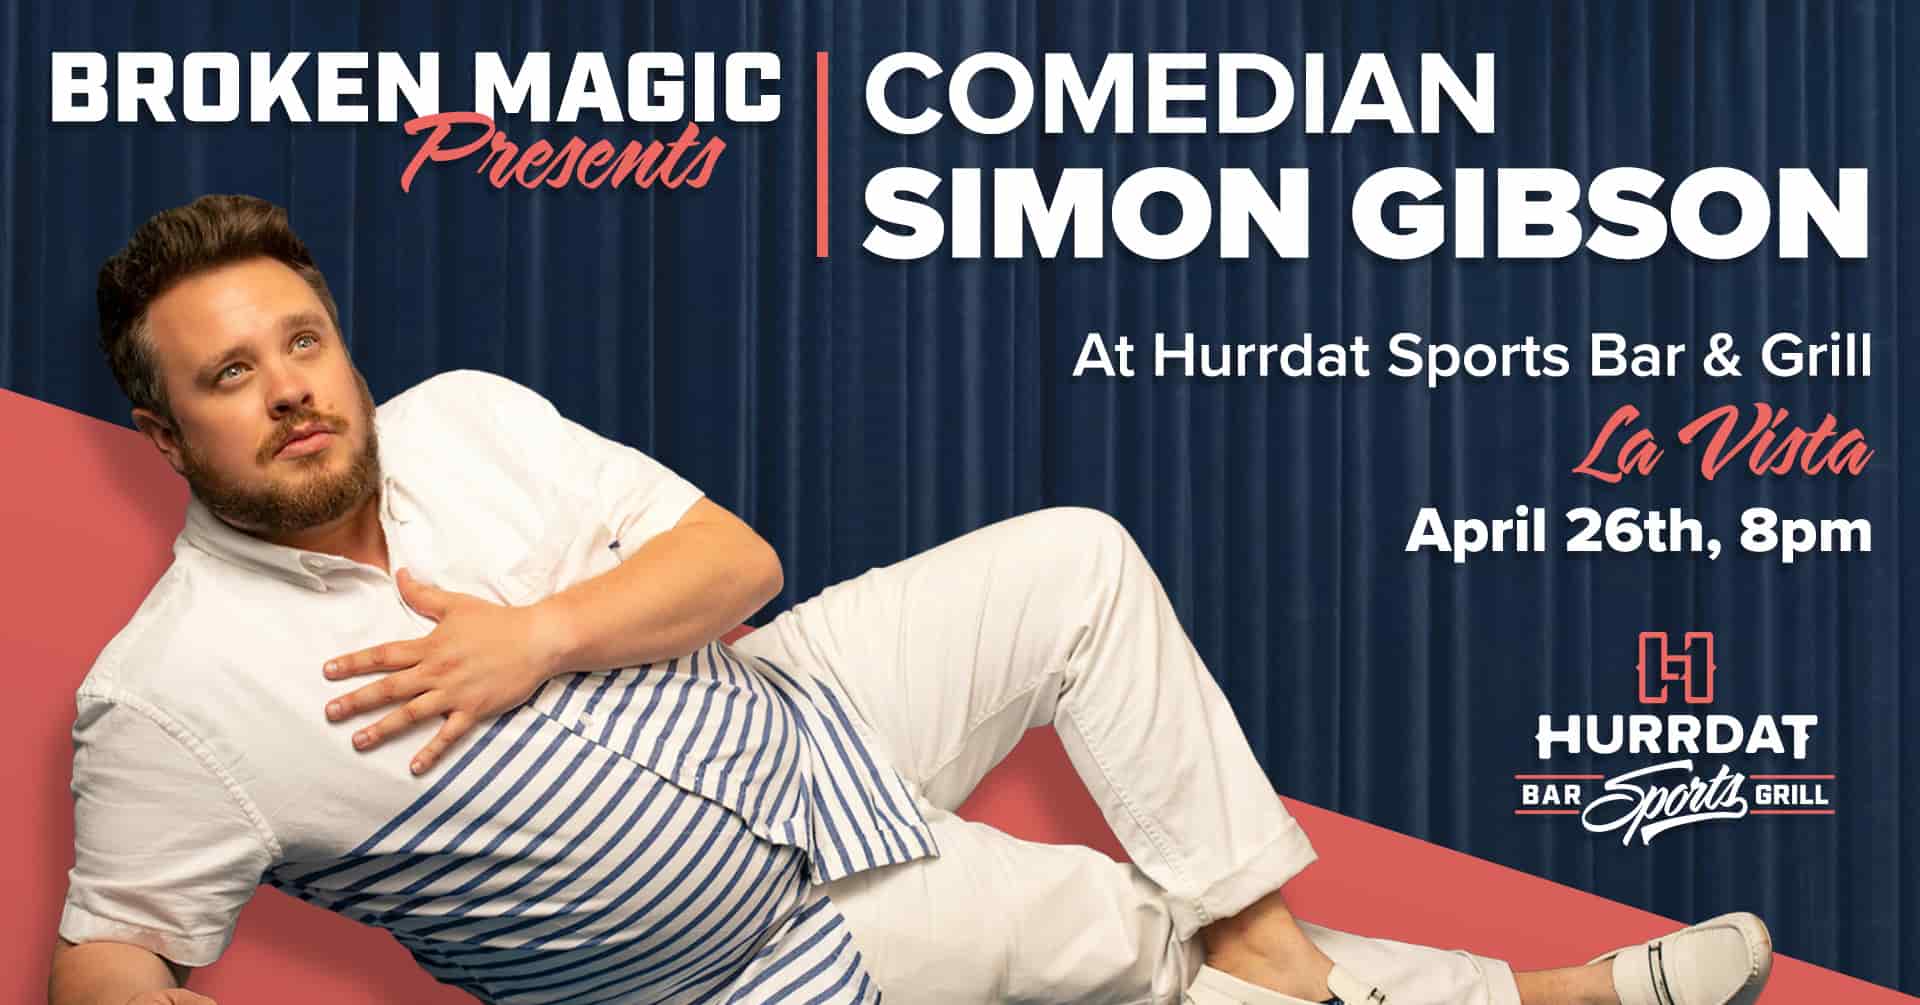 Comedy at Hurrdat Sports Bar with Simon Gibson